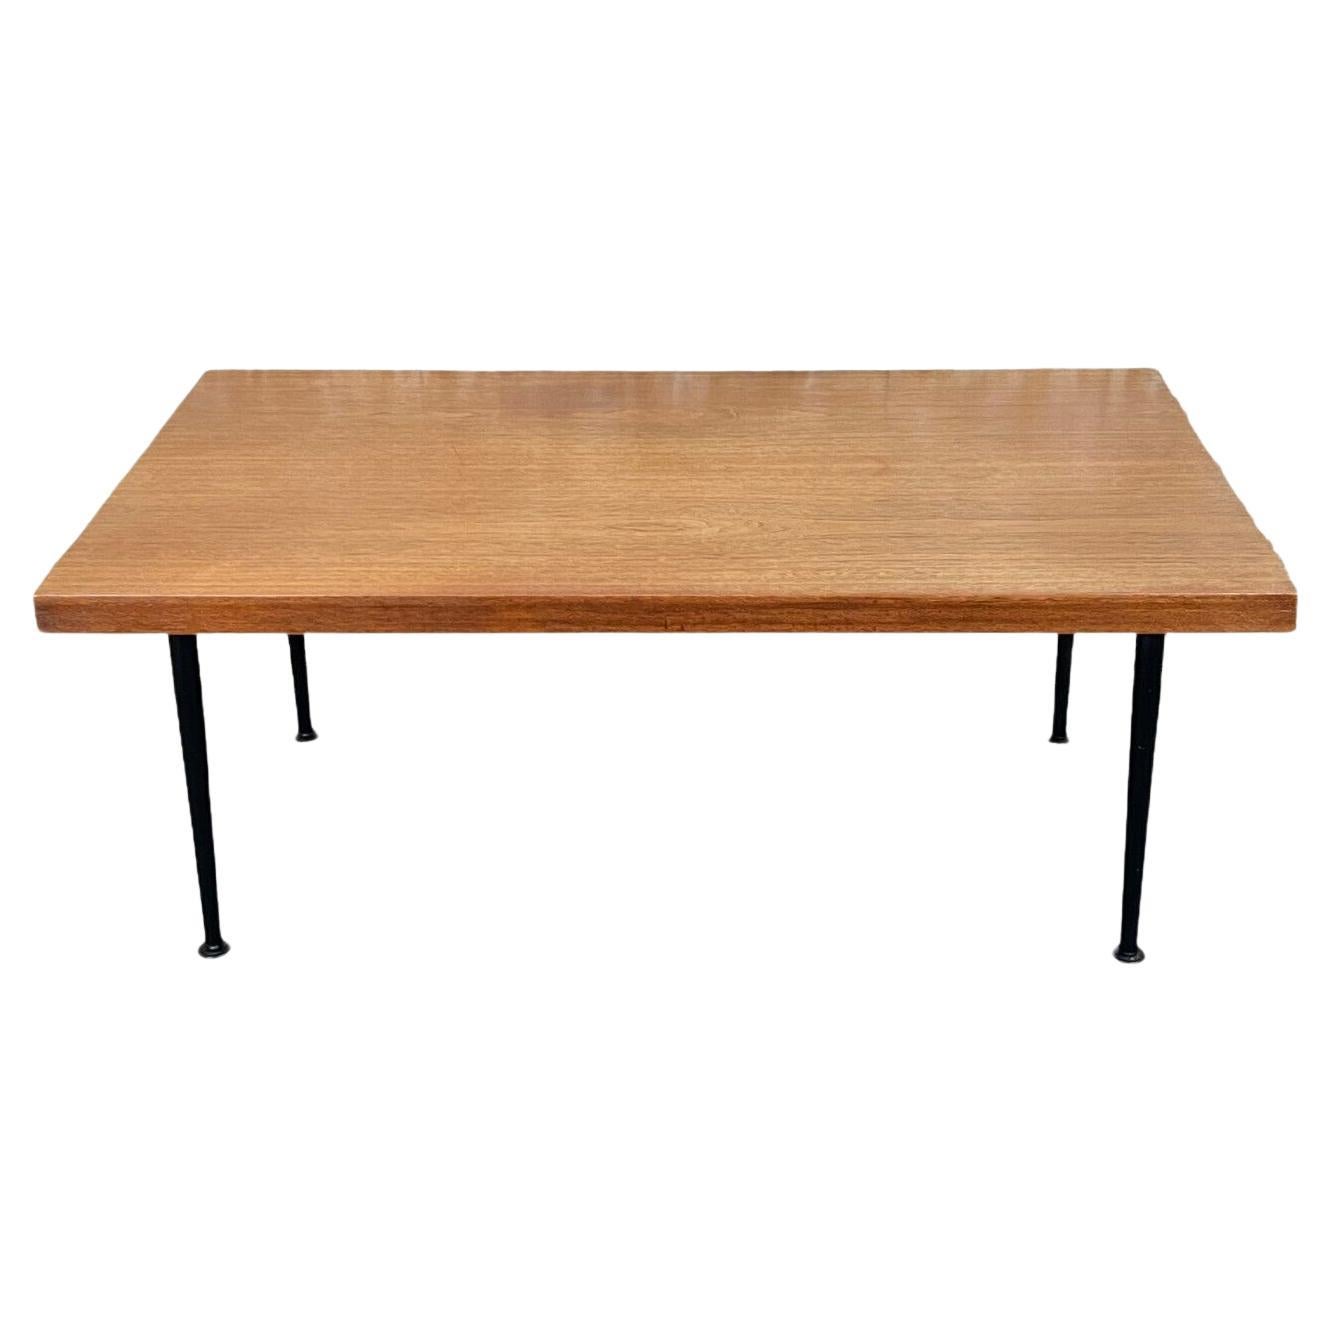 1960s-1970s Teak Coffee Table Side Table Ilse Möbel Danish Modern Design For Sale